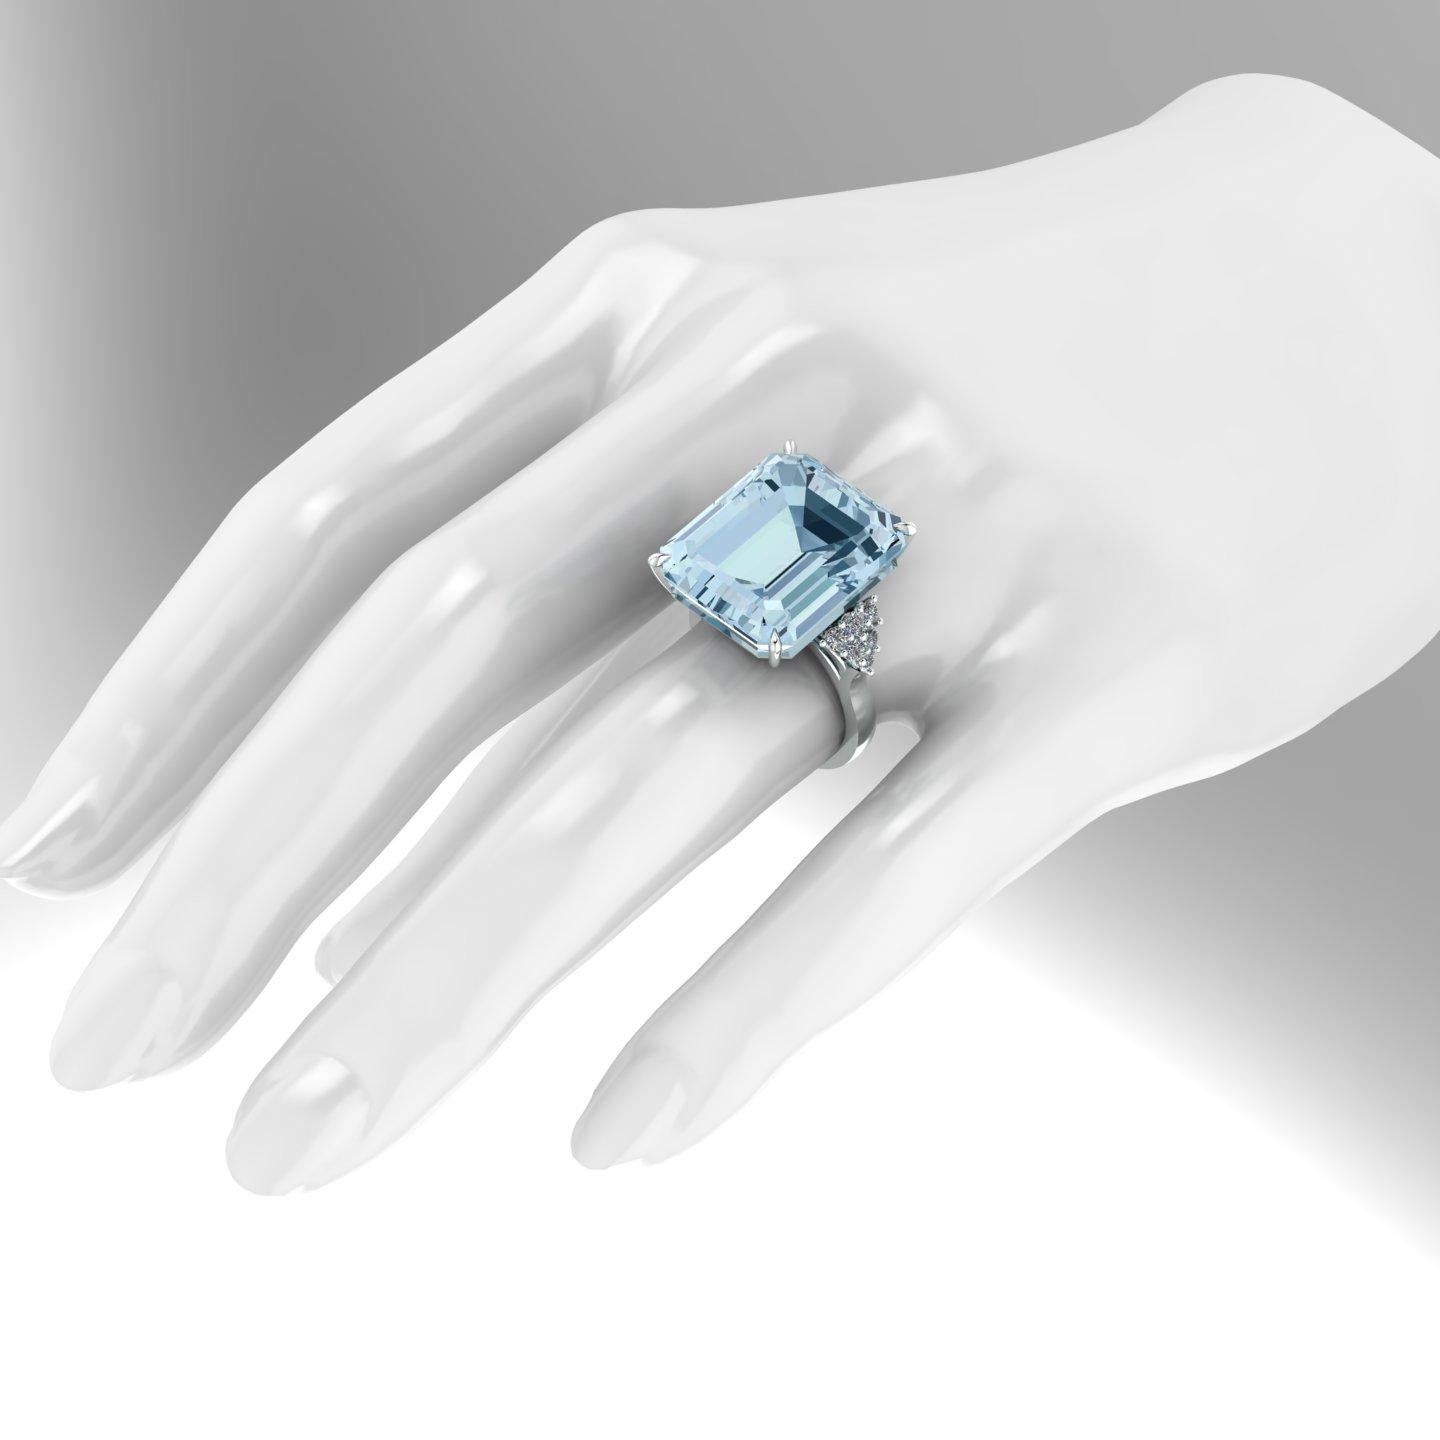 24.02 carats Aquamarine Setting in Platinum 950, side diamonds 0.36 carats 1